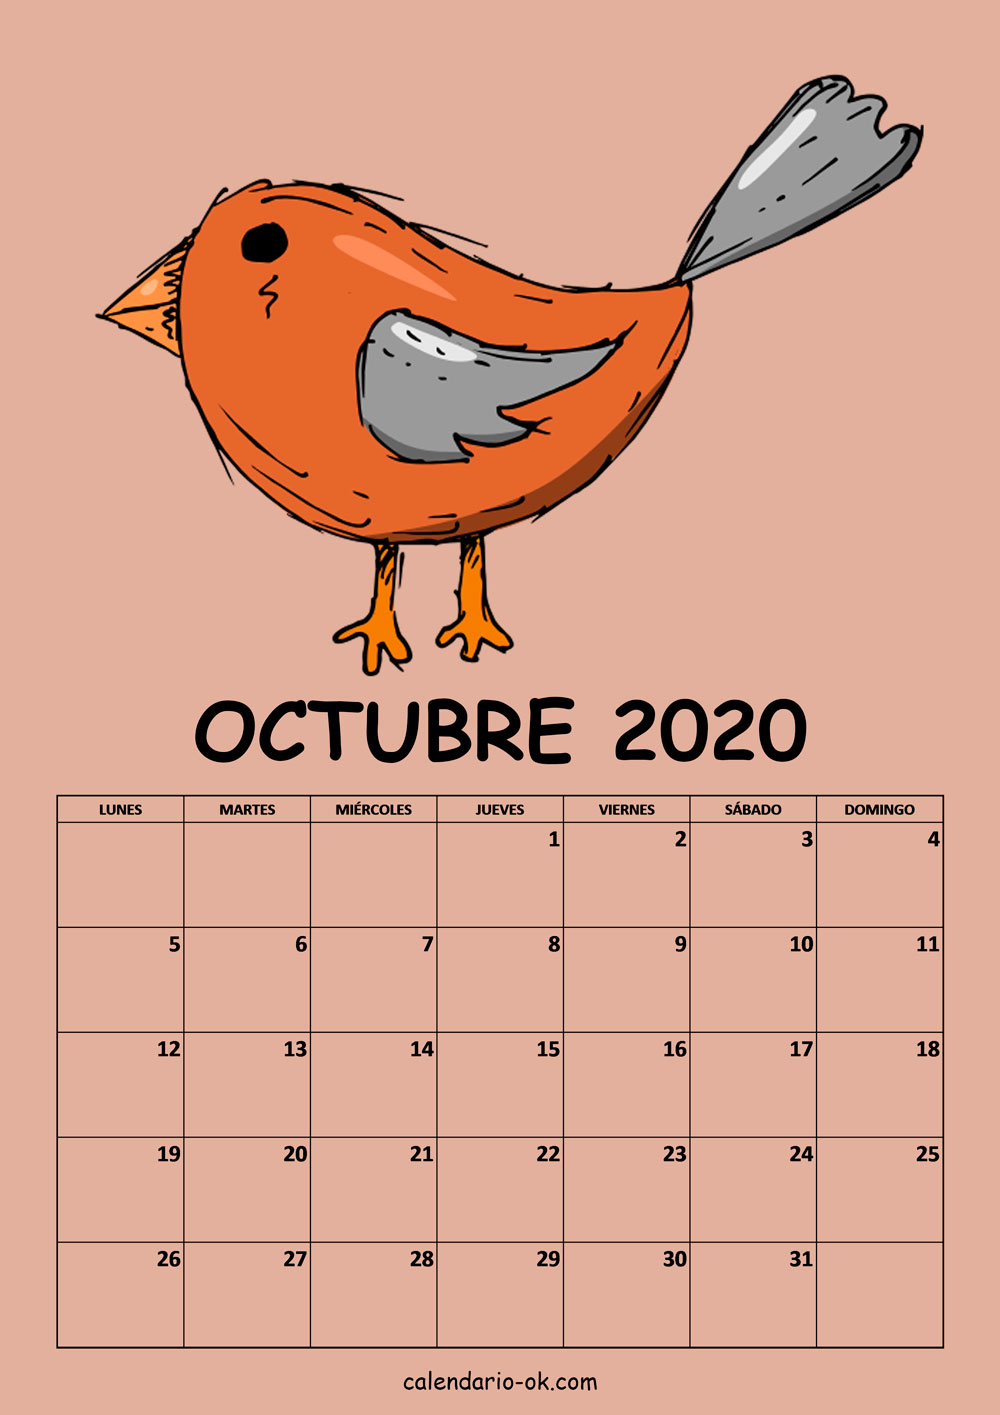 Calendario OCTUBRE 2020 DIBUJO PAJAROS